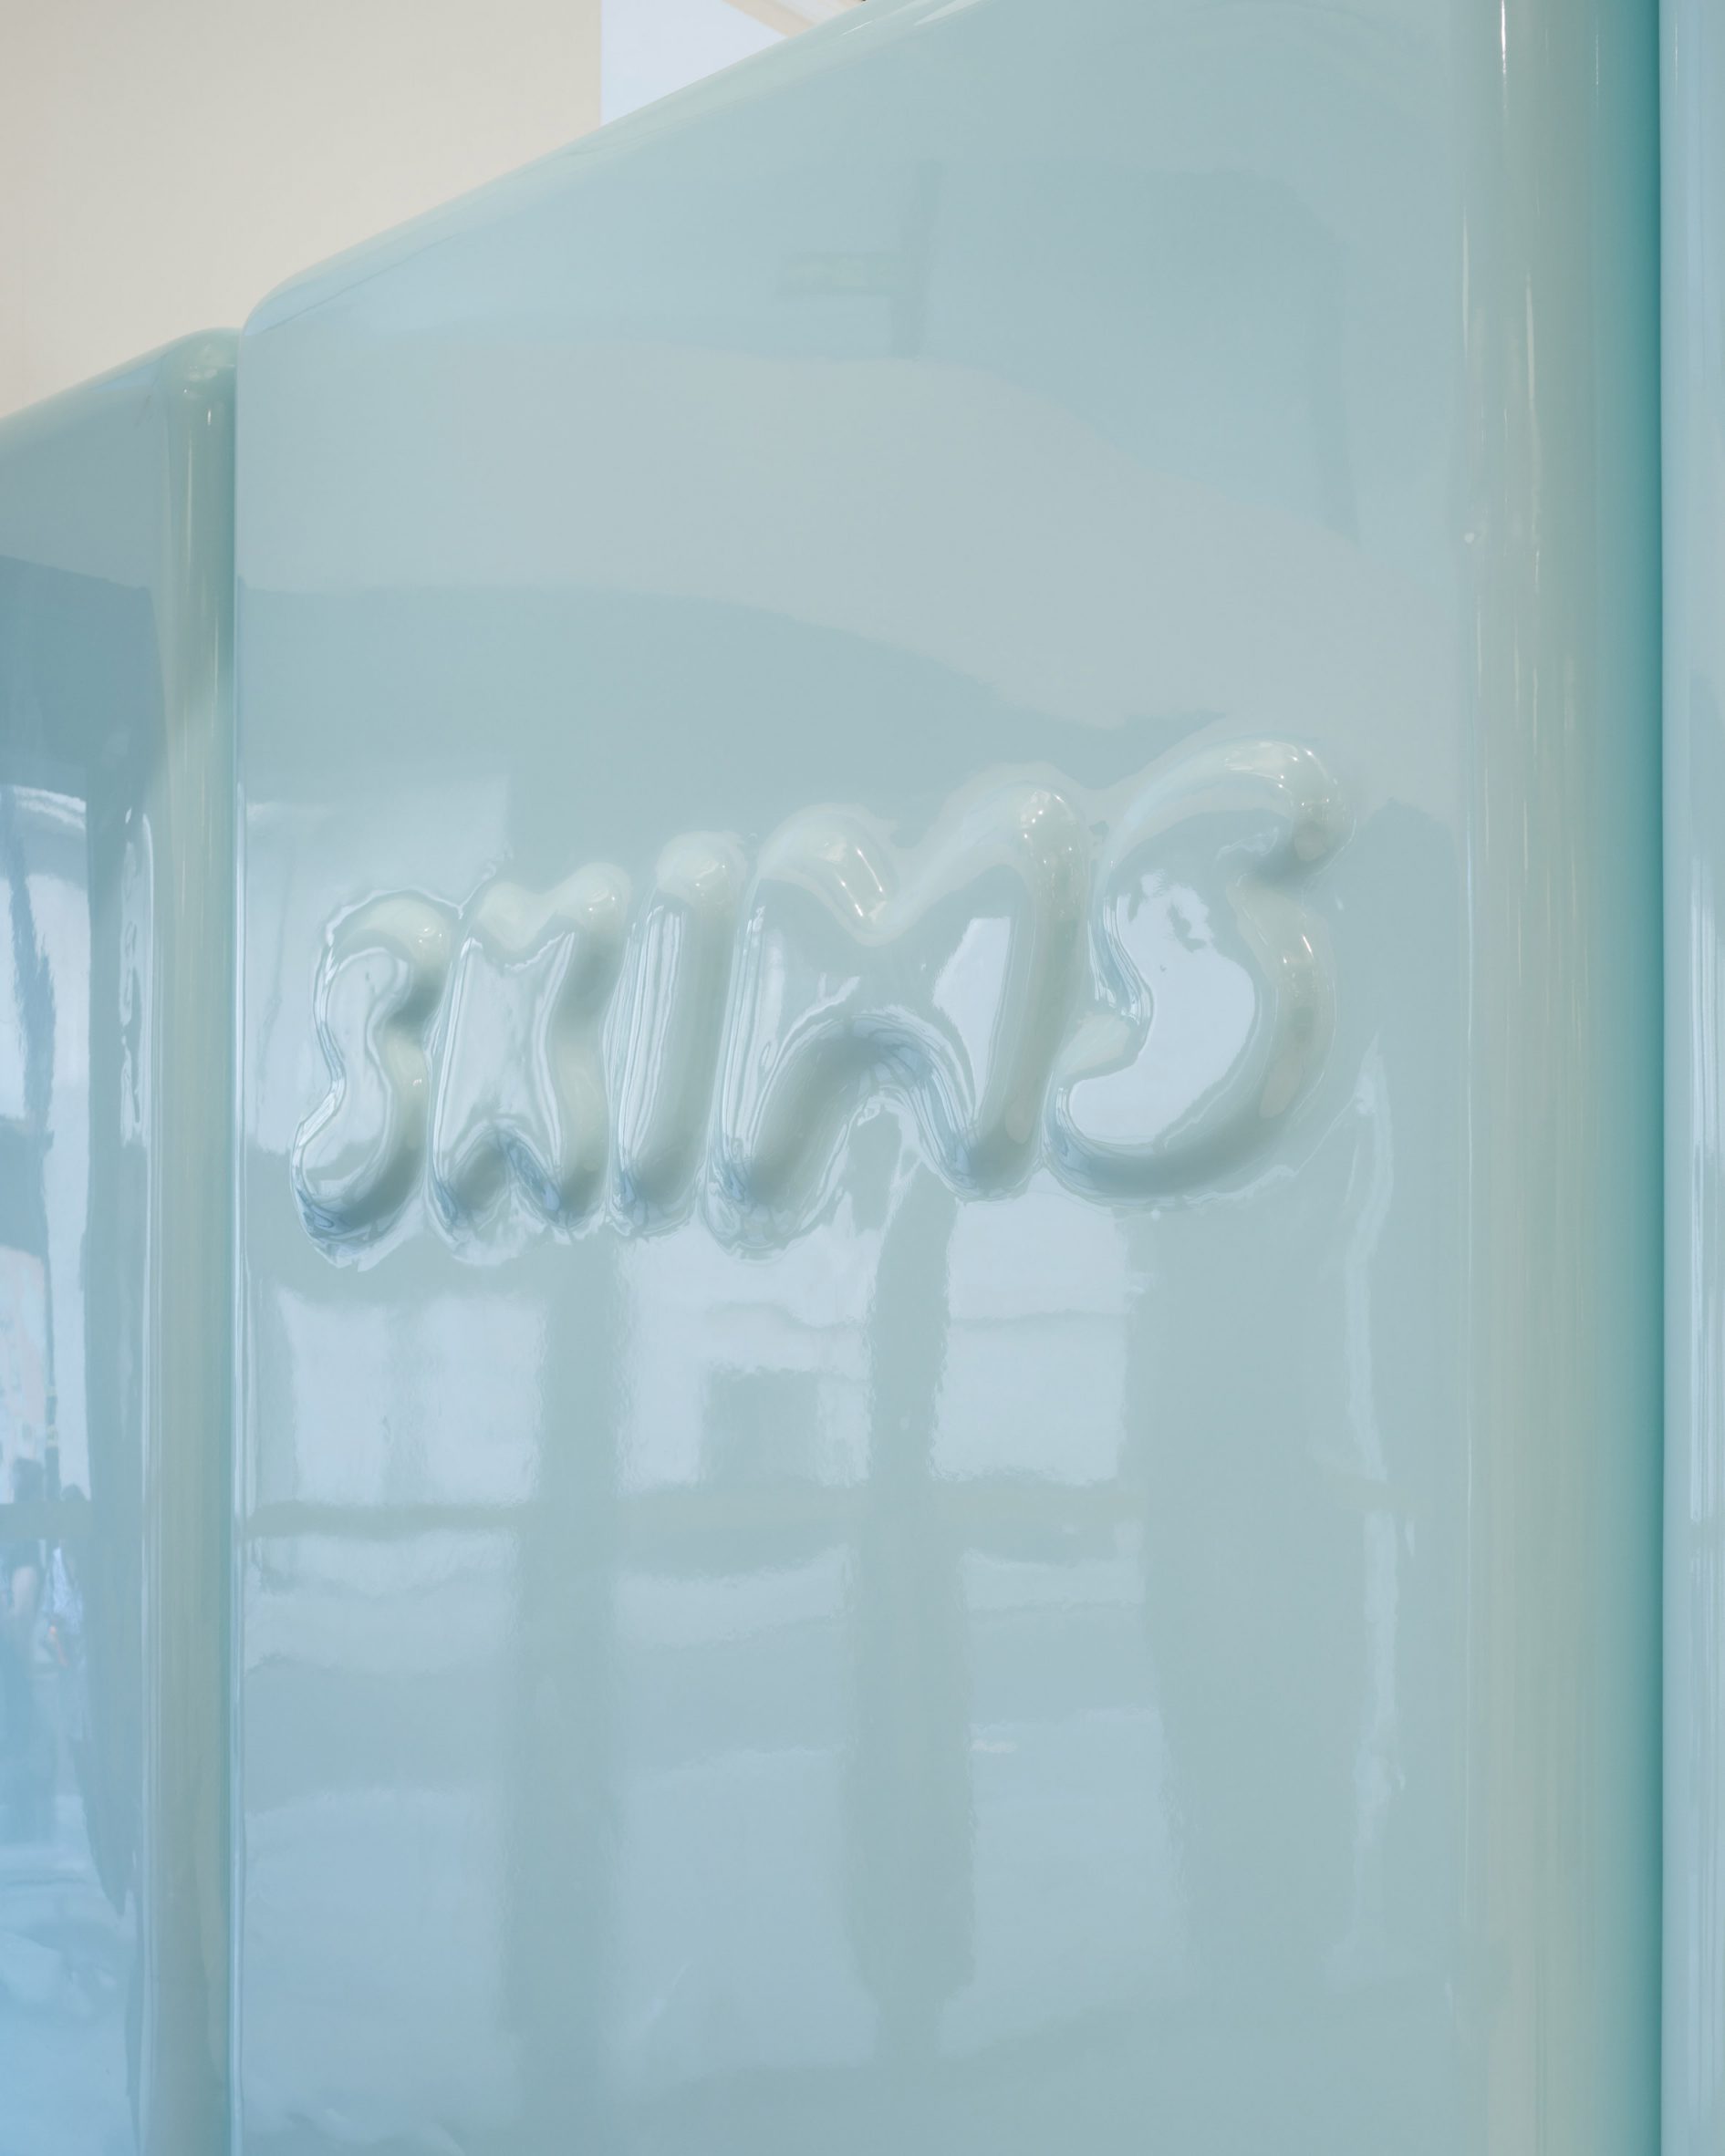 SKIMS MAKES INTERNATIONAL DEBUT AT SELFRIDGES – Selfridges Press